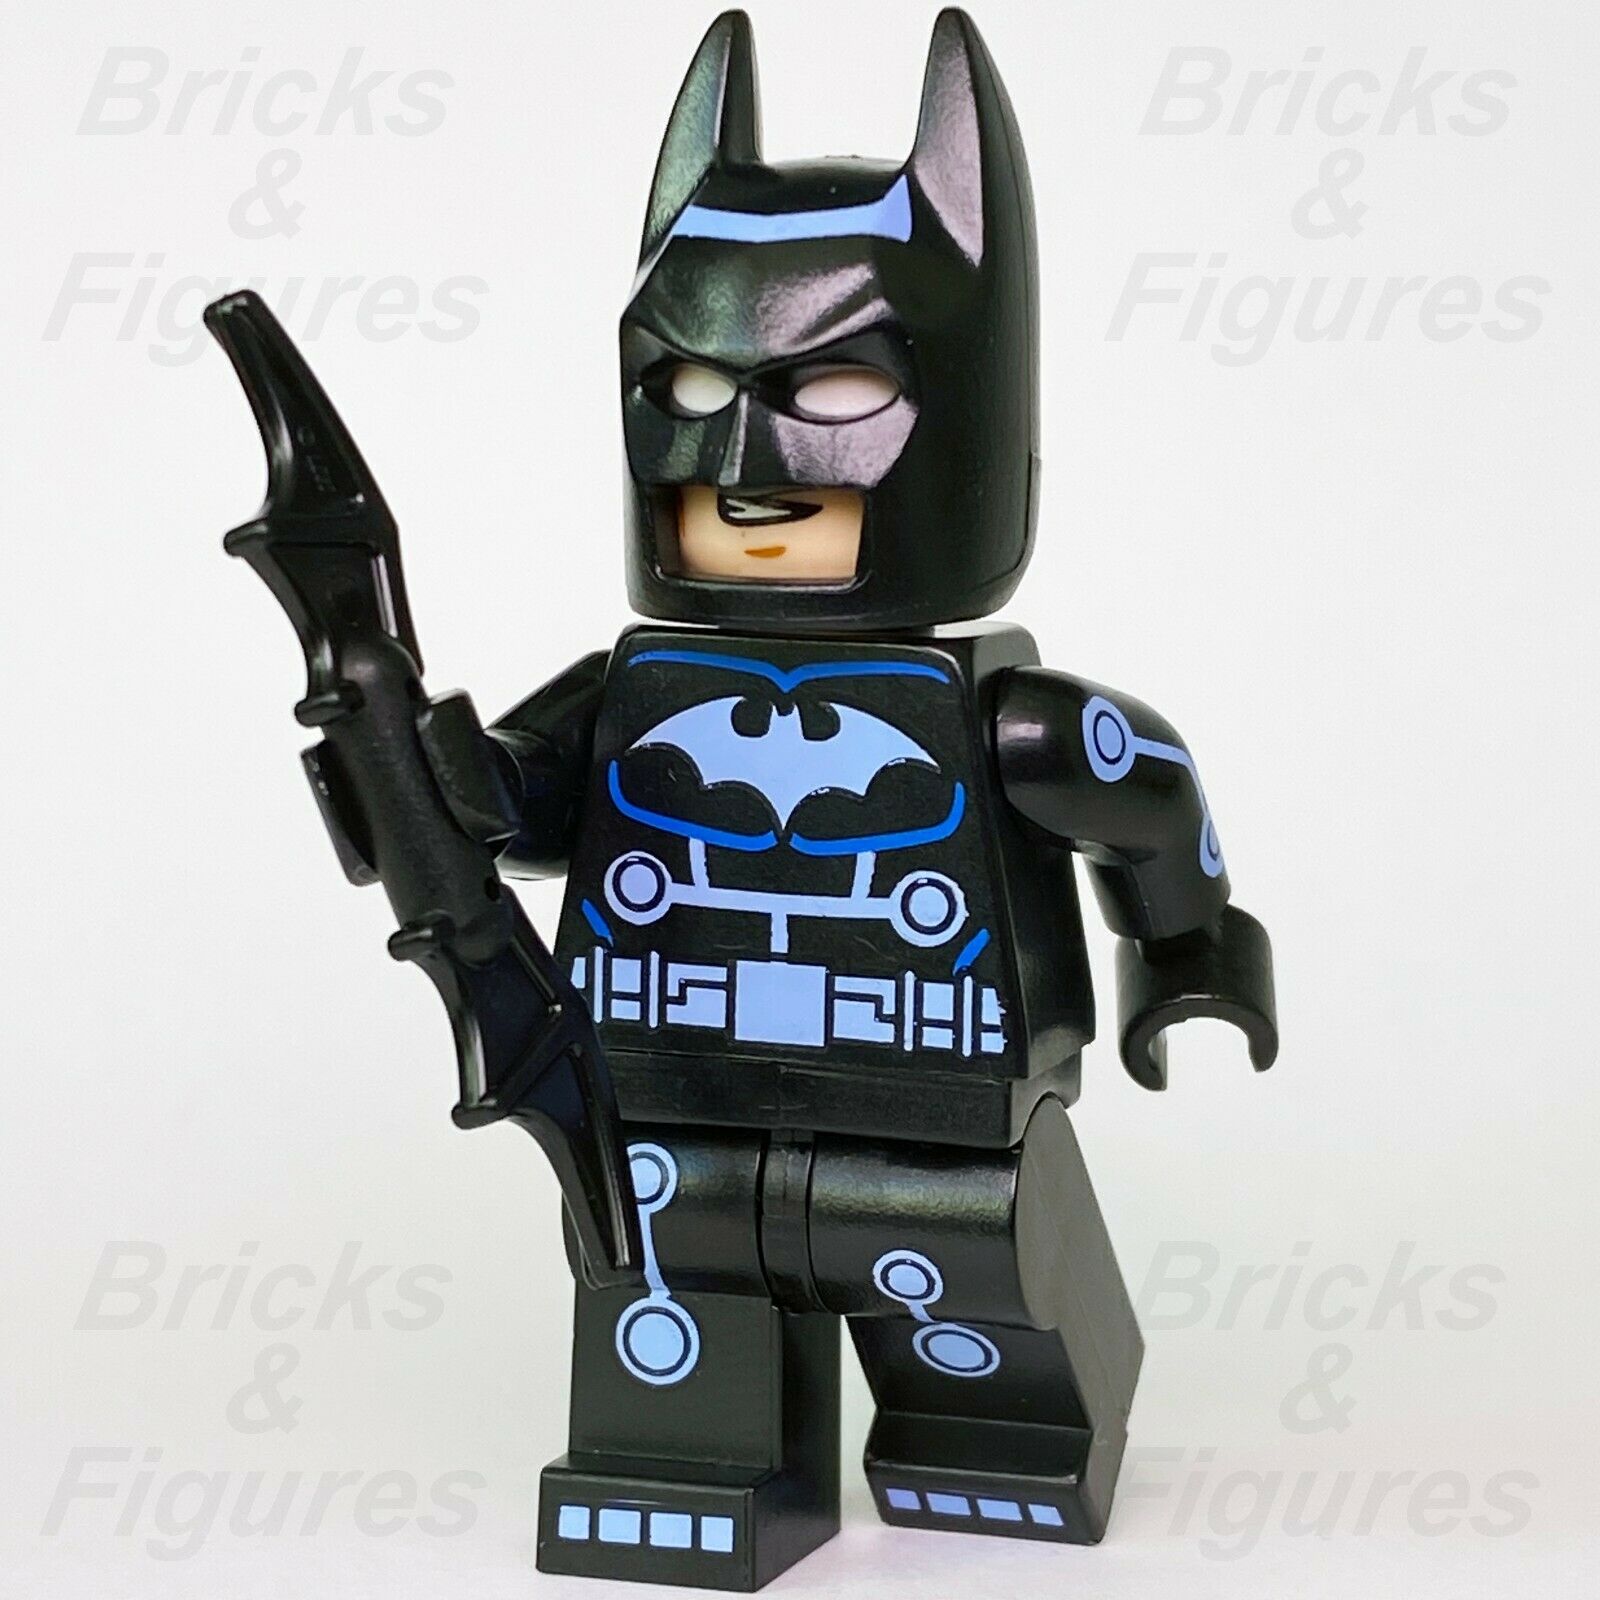 DC Super Heroes LEGO Batman 2 in Electro Suit Justice League Minifigure 5002889 - Bricks & Figures